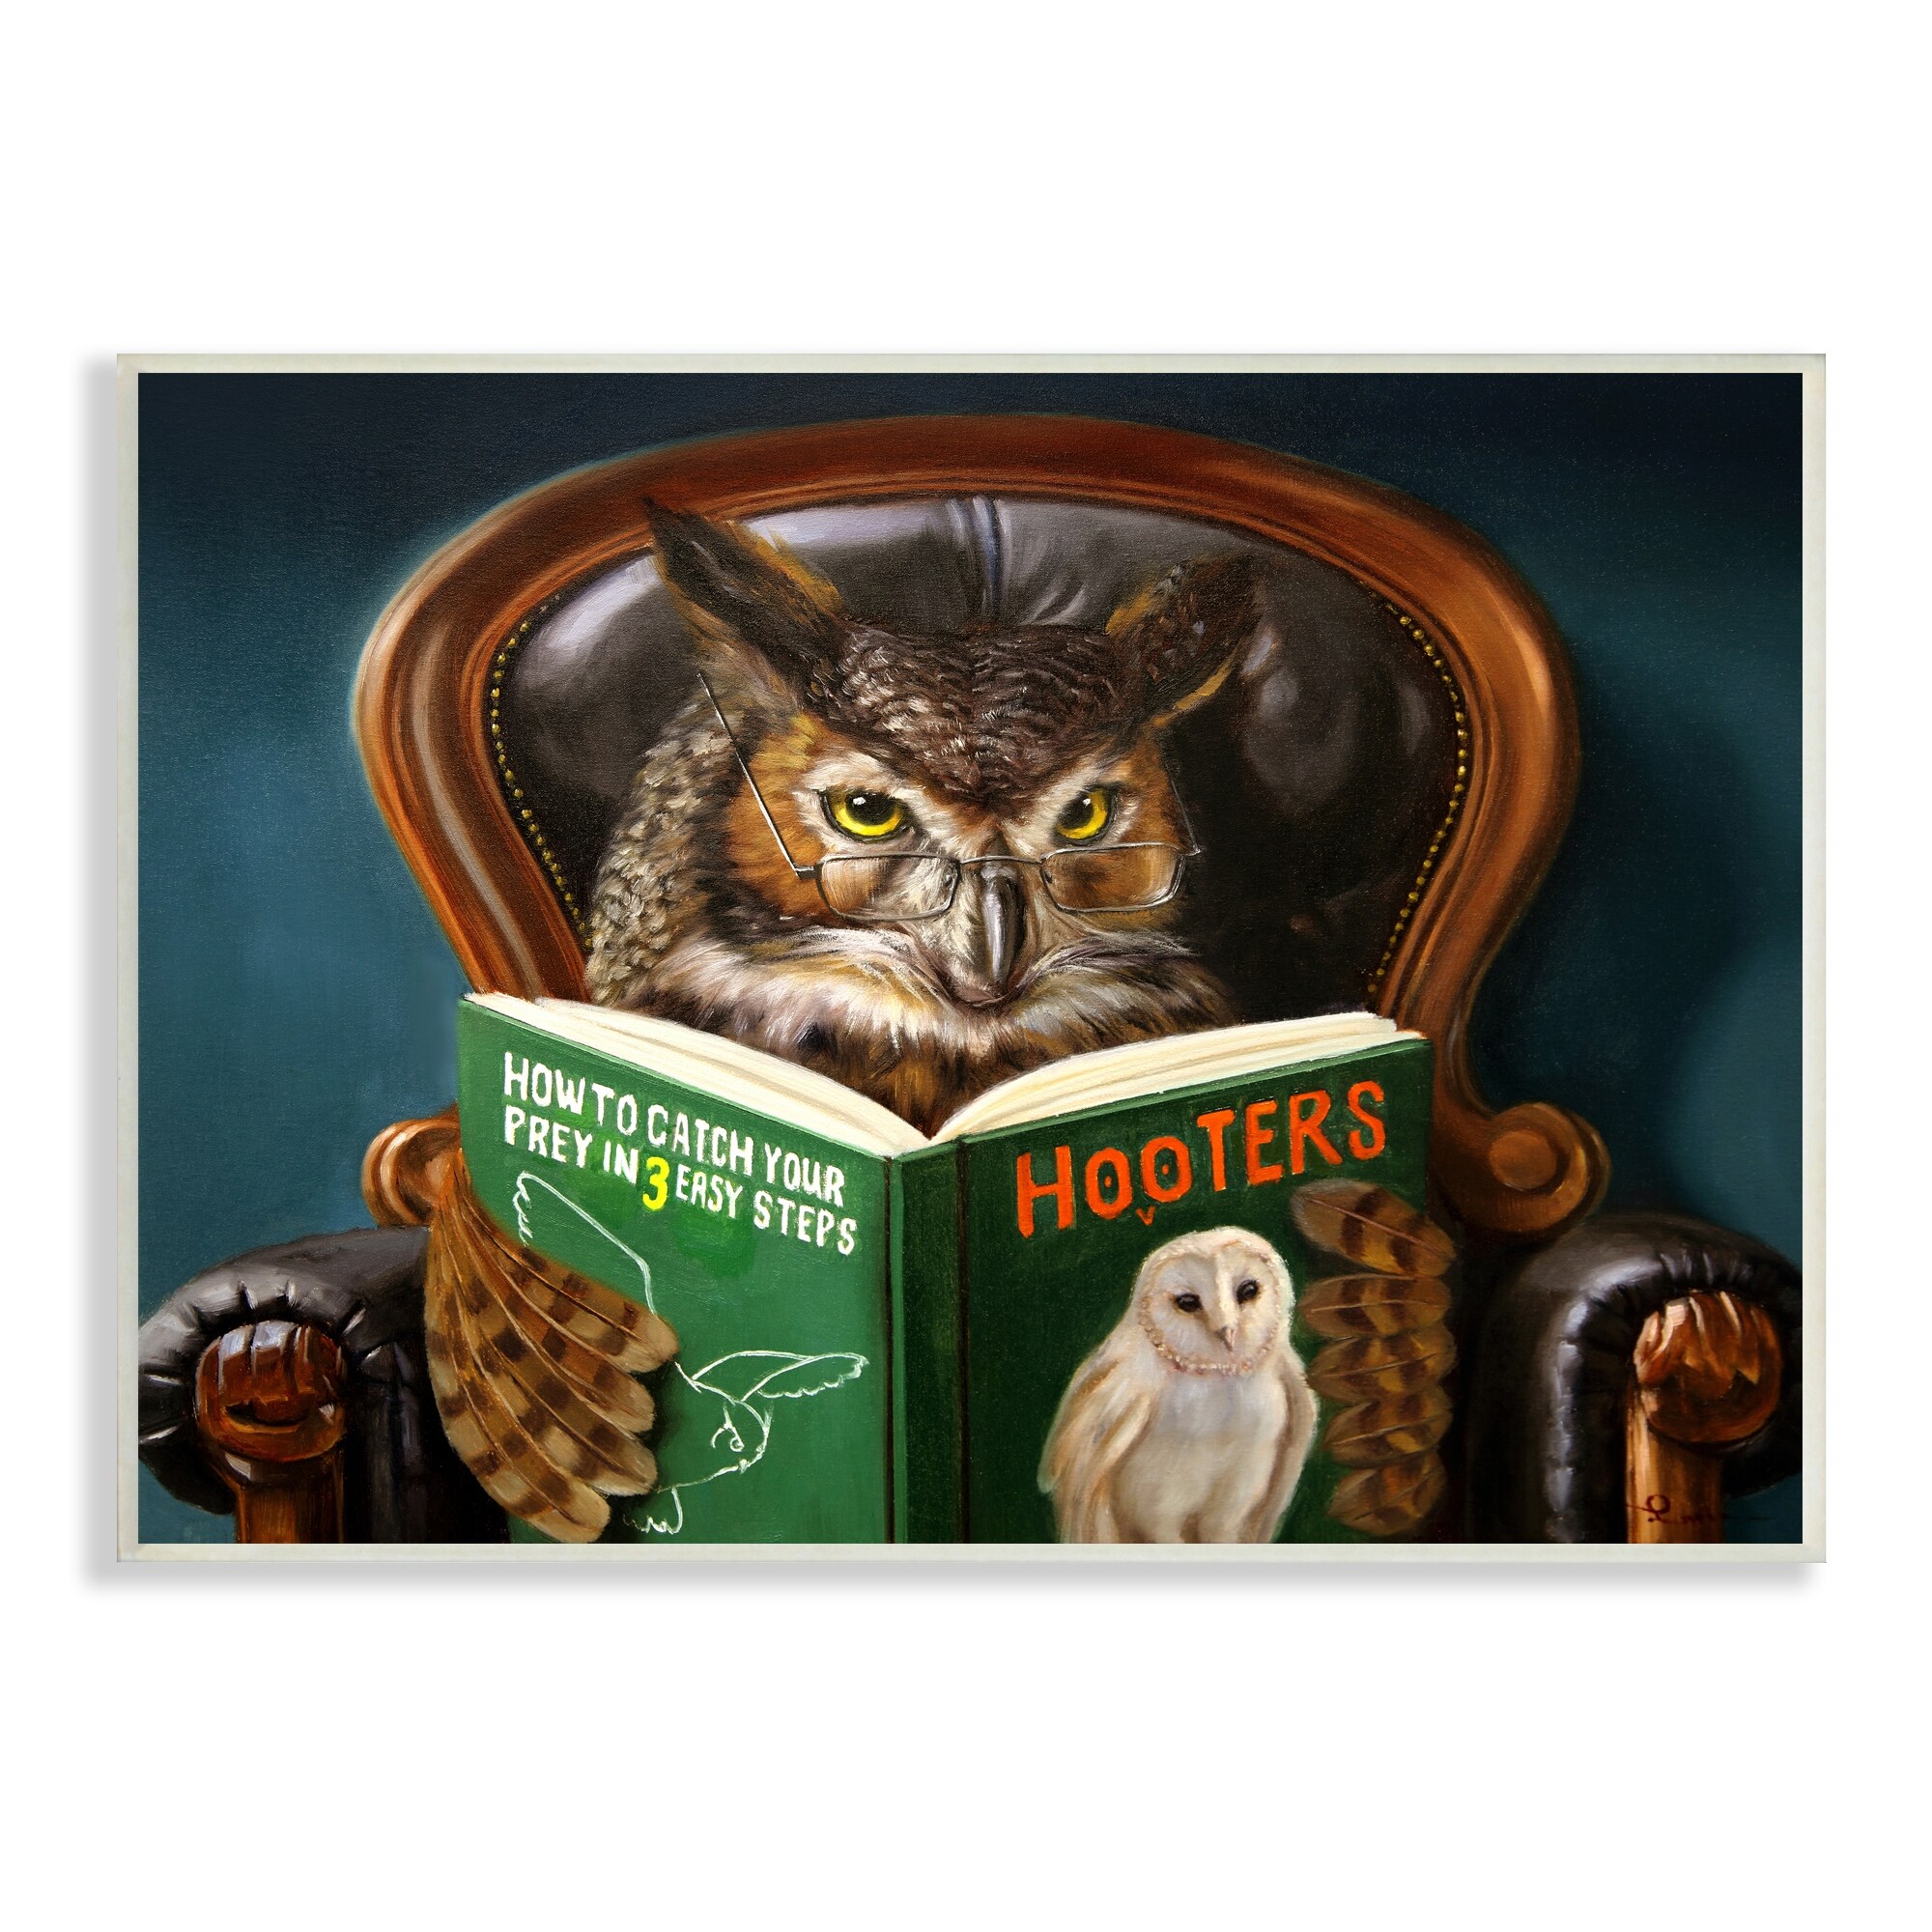 owl reading